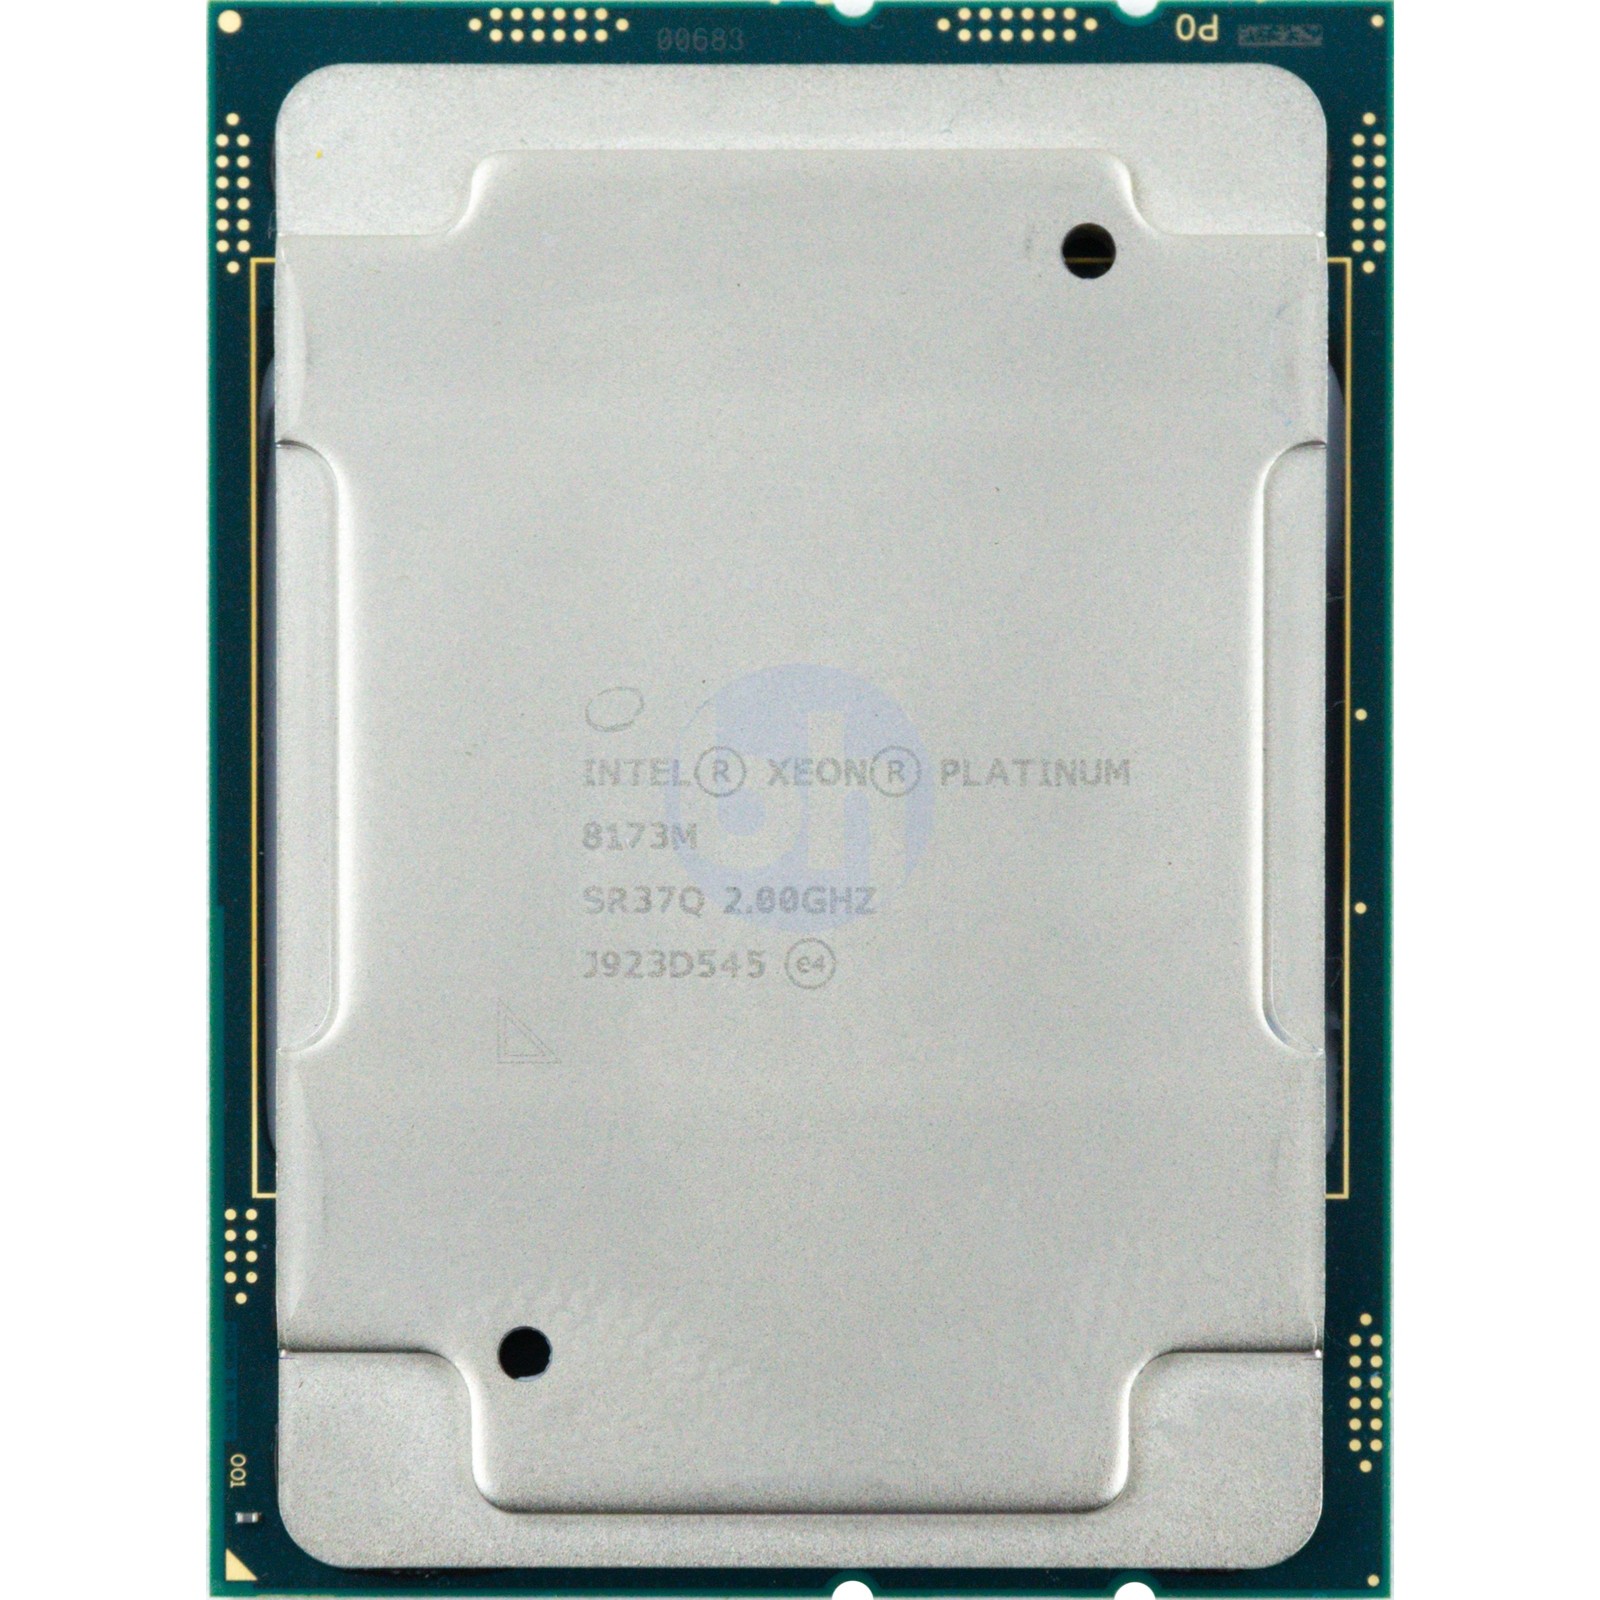 SR37Q Intel Xeon Platinum 8173M (SR37Q) - 28-Core 2.00GHz 38.5MB 165W CPU